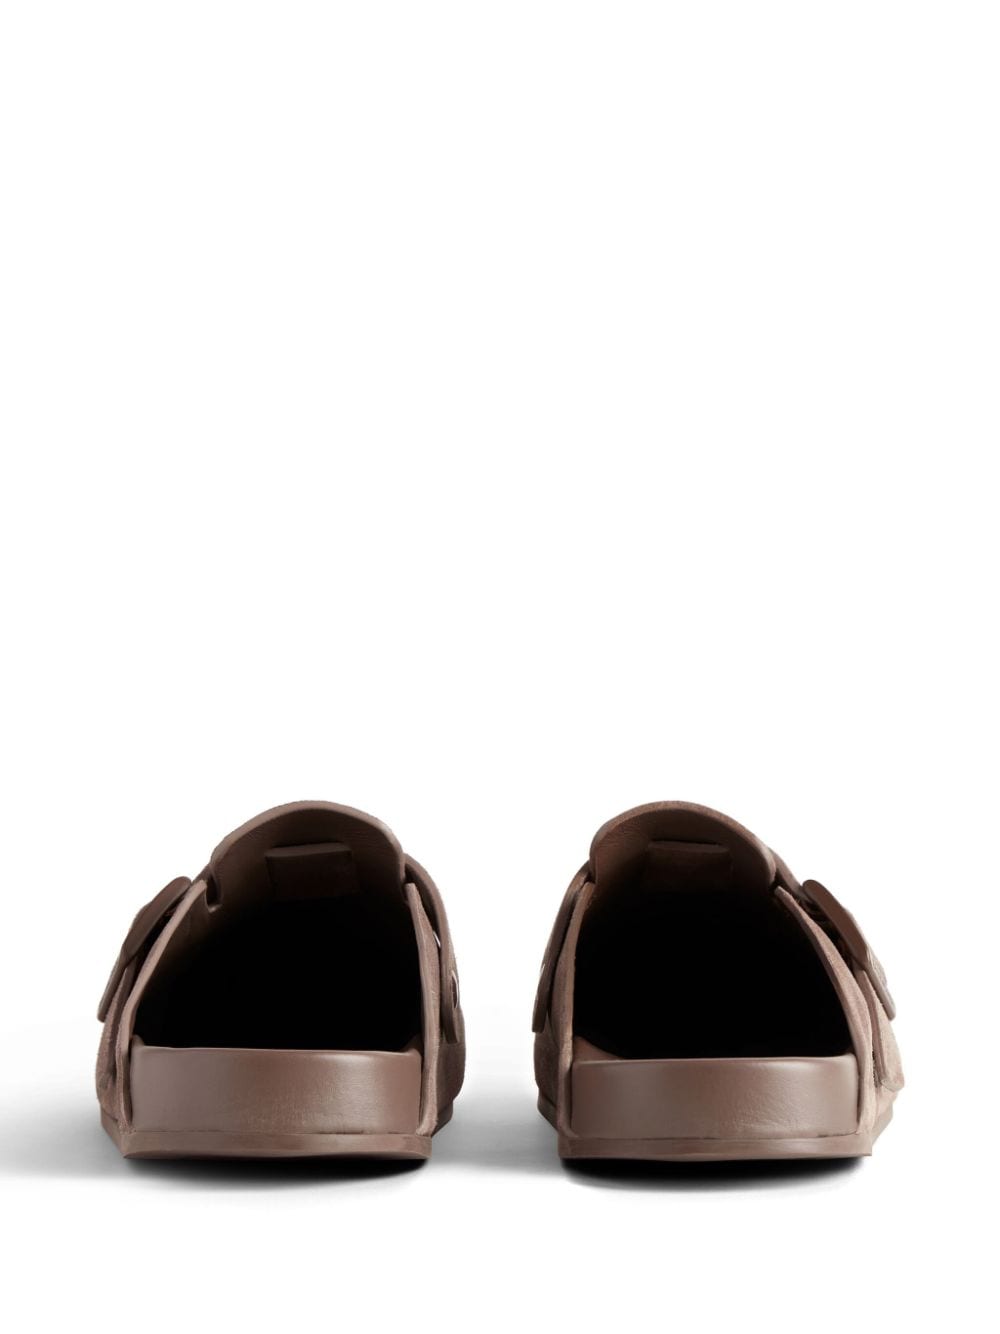 BALENCIAGA Brown Straw Flat Sandals for Women